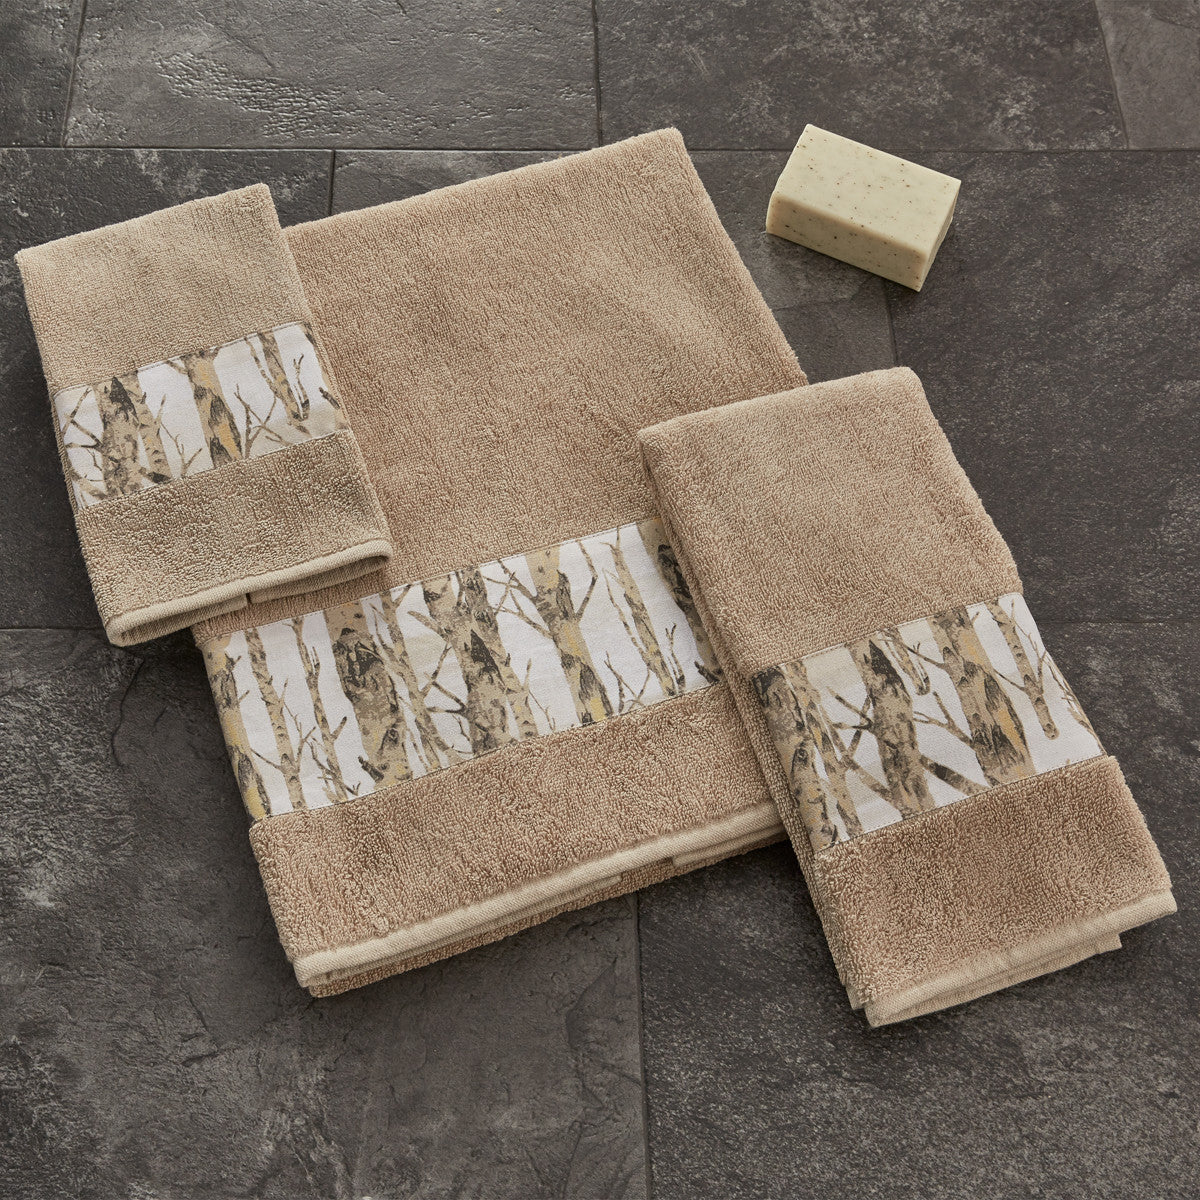 Birch Forest Terry Bath Towel - Park Designs